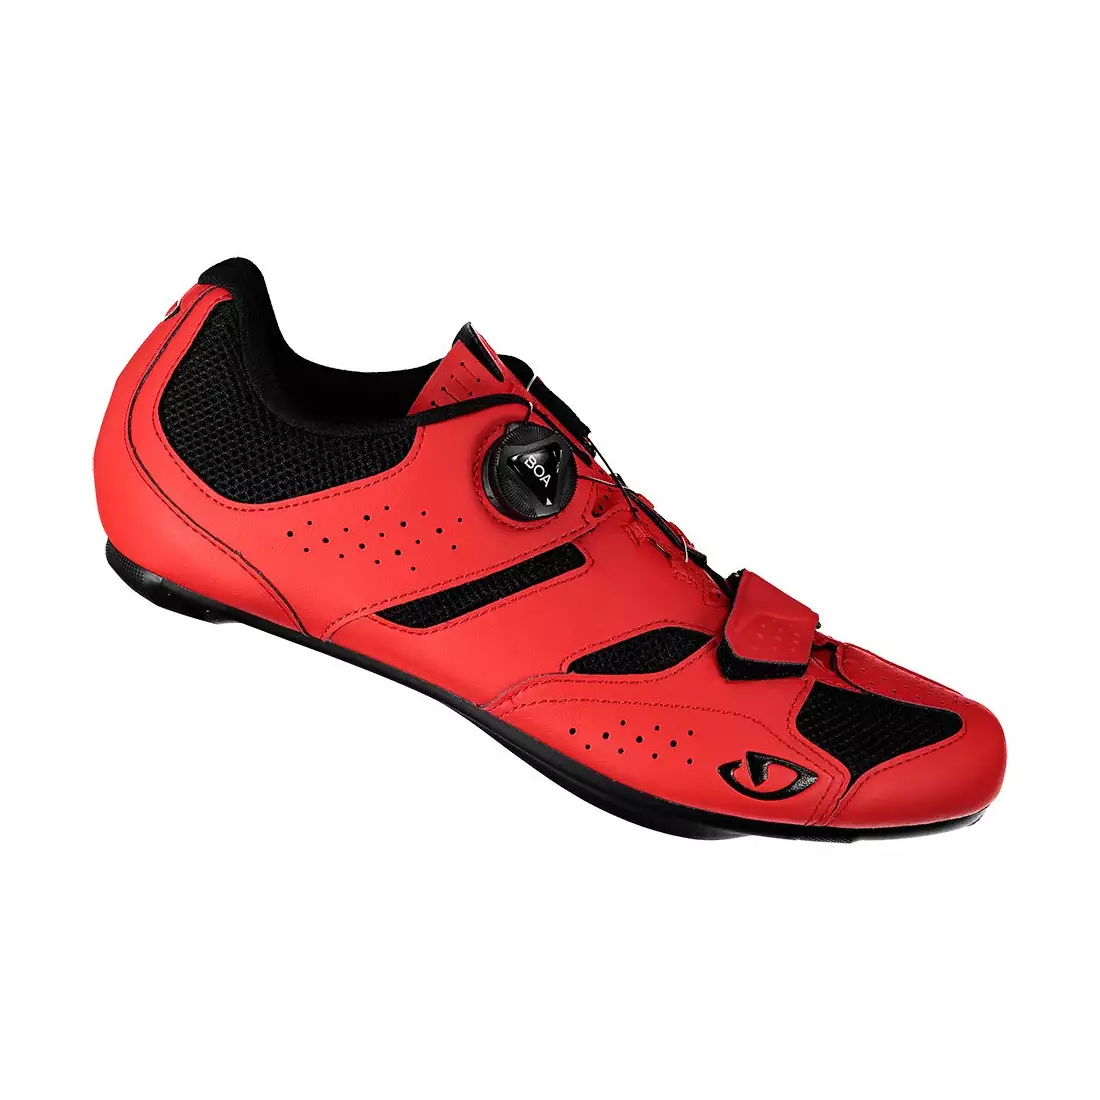 GIRO pánská cyklistická obuv SAVIX II bright red GR-7126180